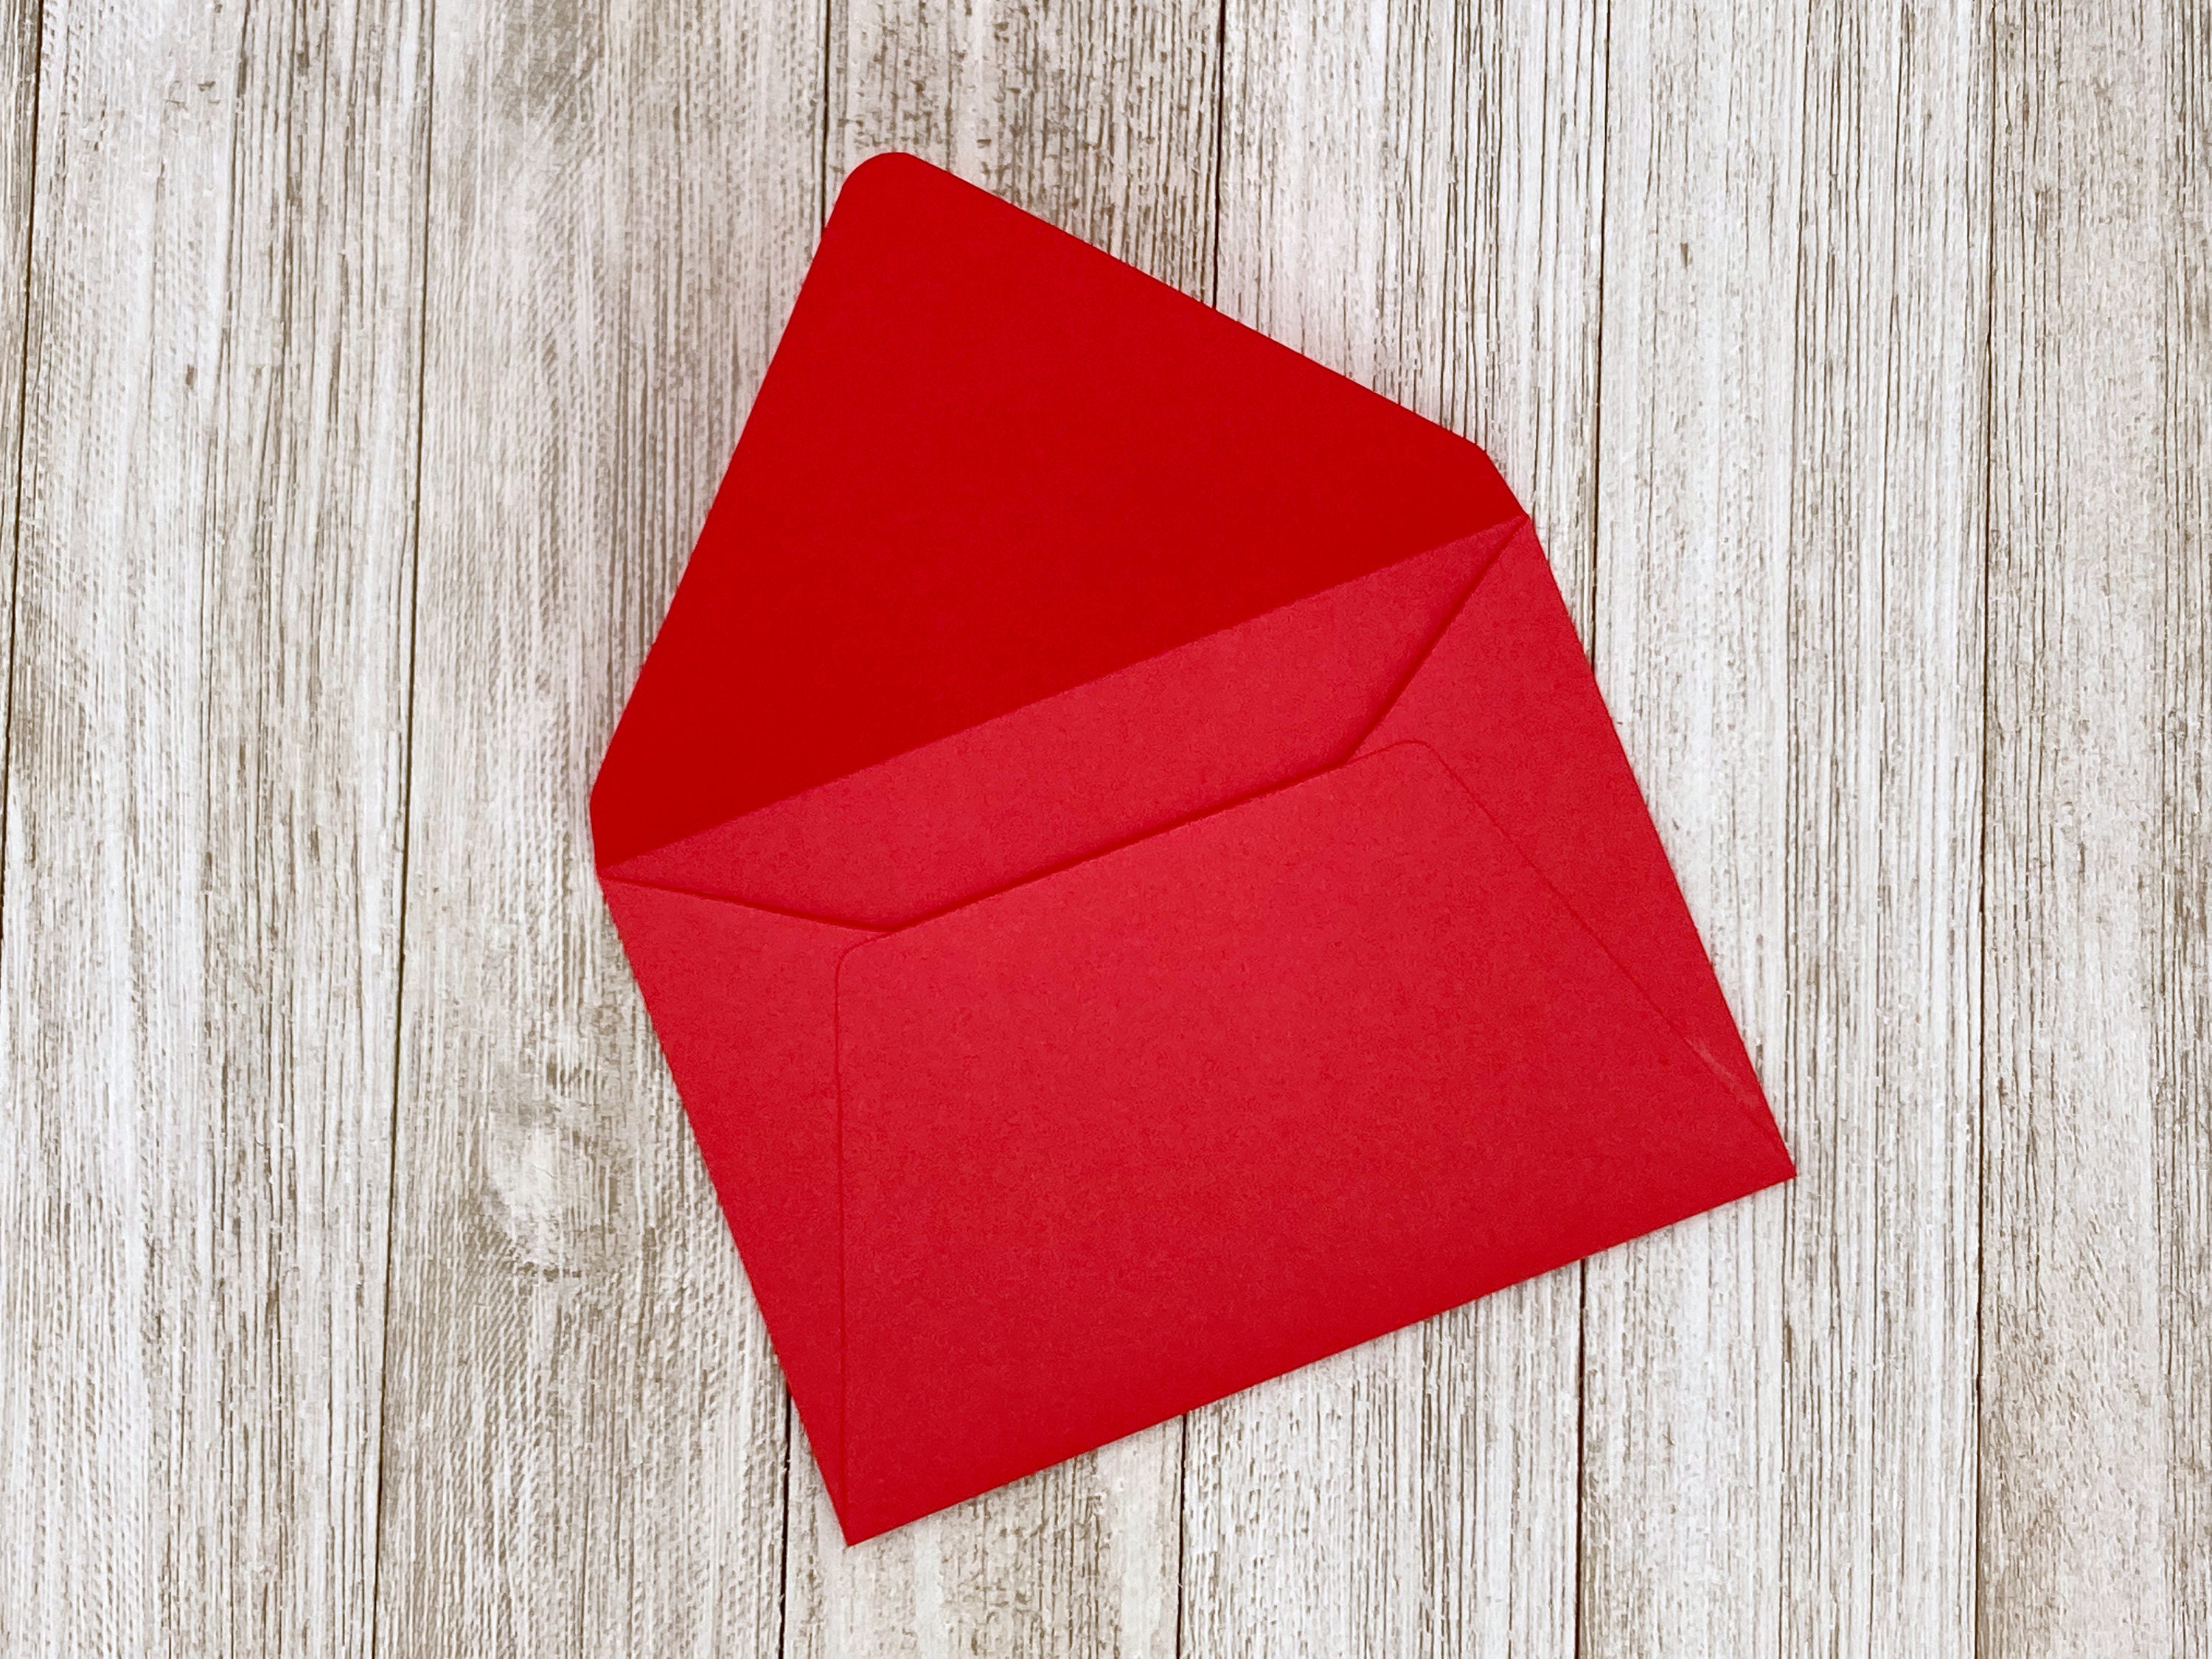 4 Bar Red Envelopes/ Pure Red Envelopes / Fit 4 7/8 X 3 1/2 